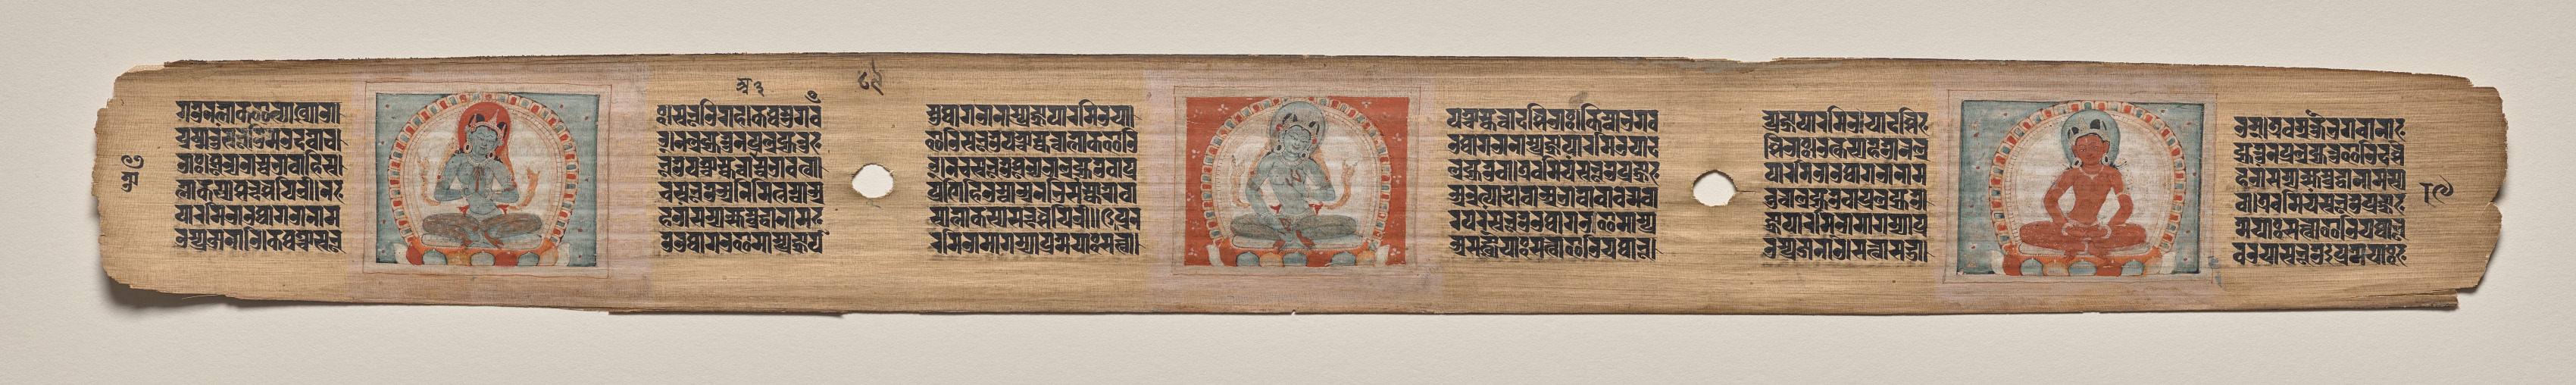 Three female figures, folio 89 (verso), from a Manuscript of the Perfection of Wisdom in Eight Thousand Lines (Ashtasahasrika Prajnaparamita-sutra)